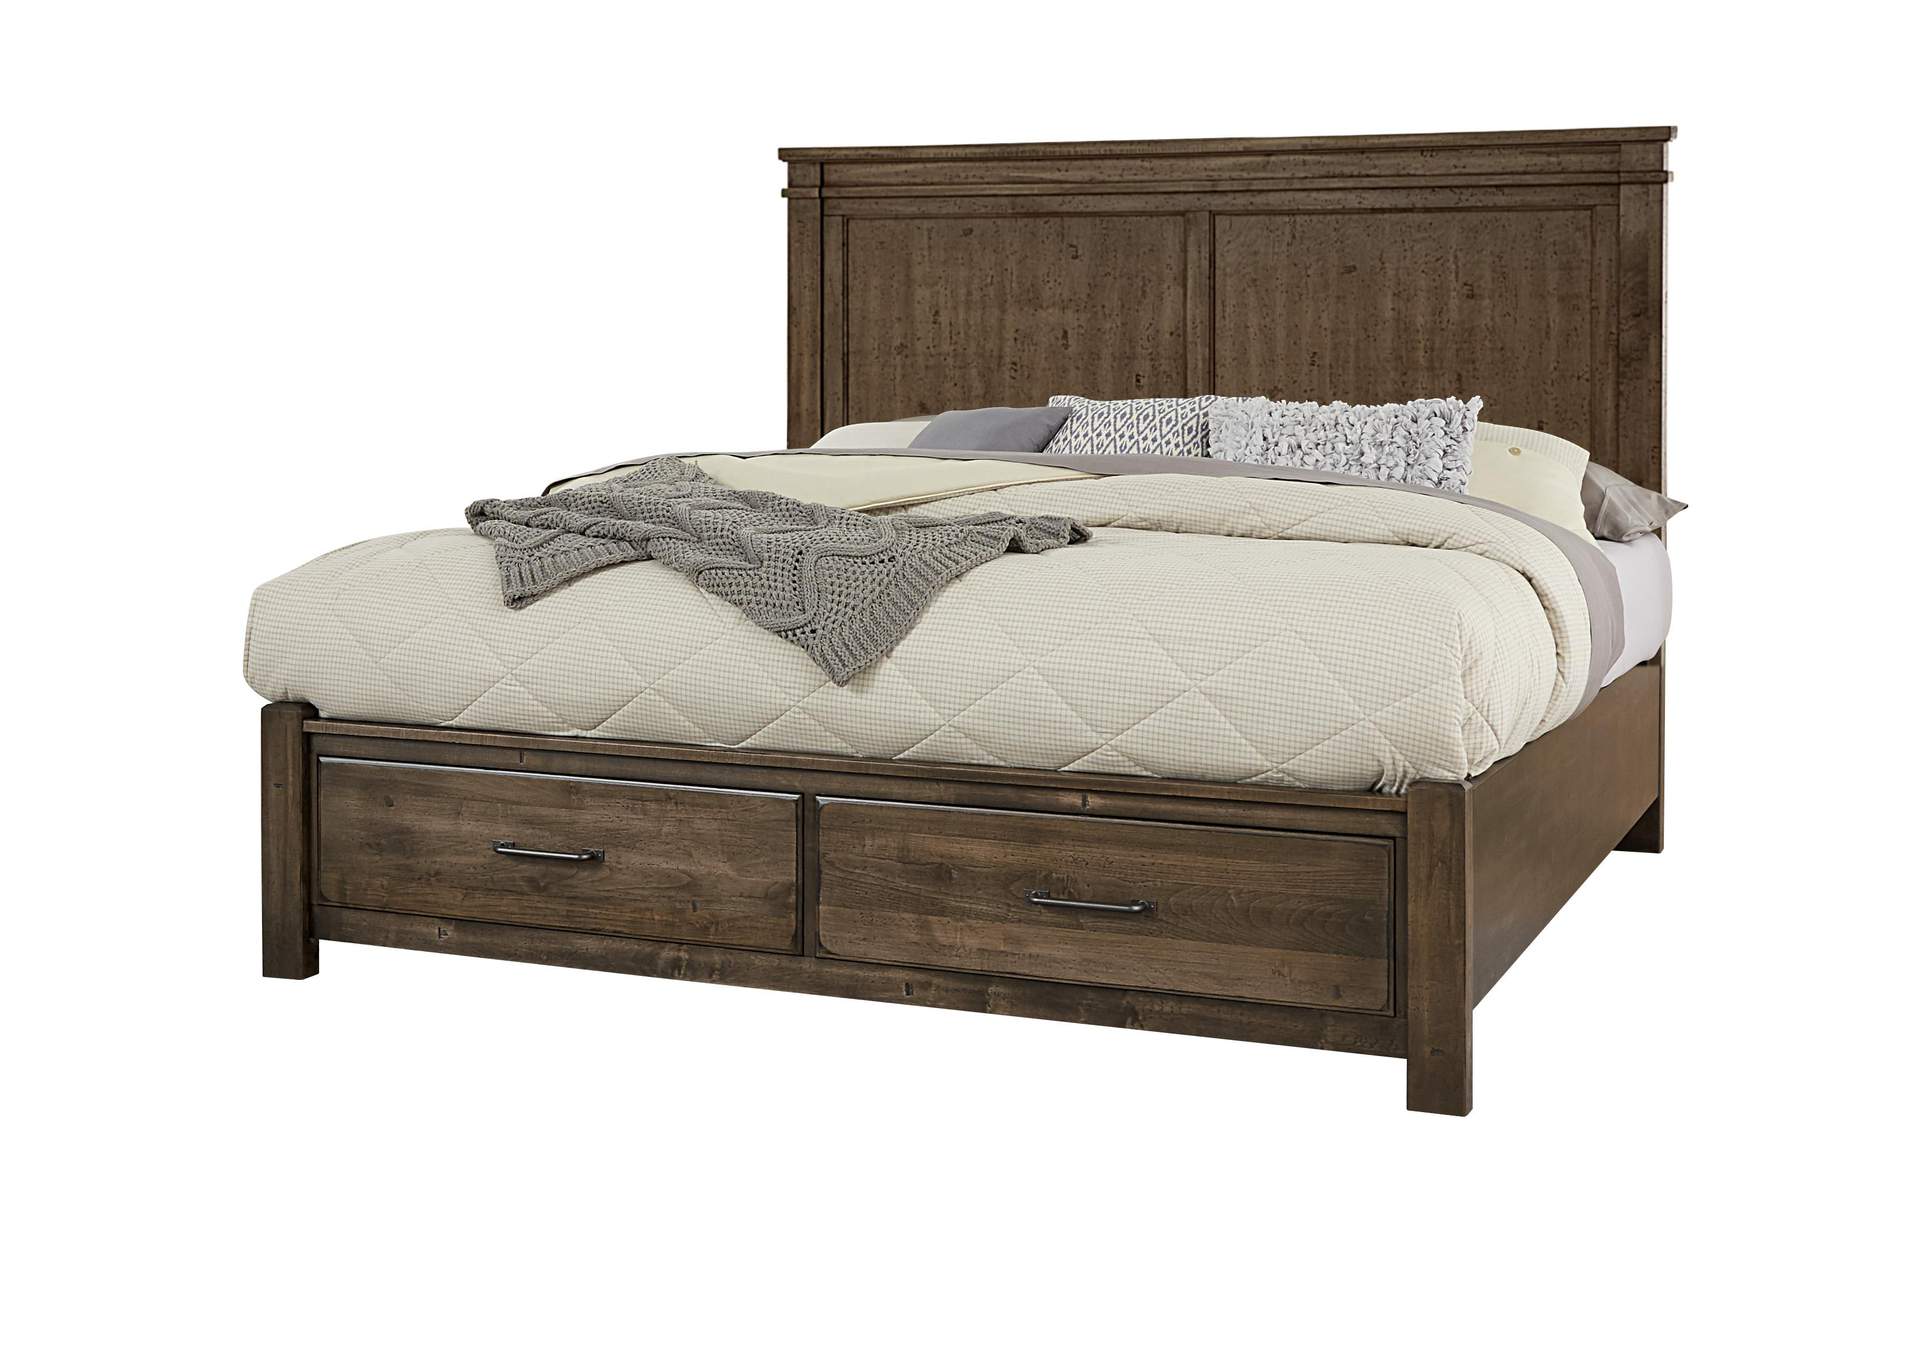 Cool Rustic Mondo Mansion King Bed w/2 Drawer Storage,Vaughan-Bassett